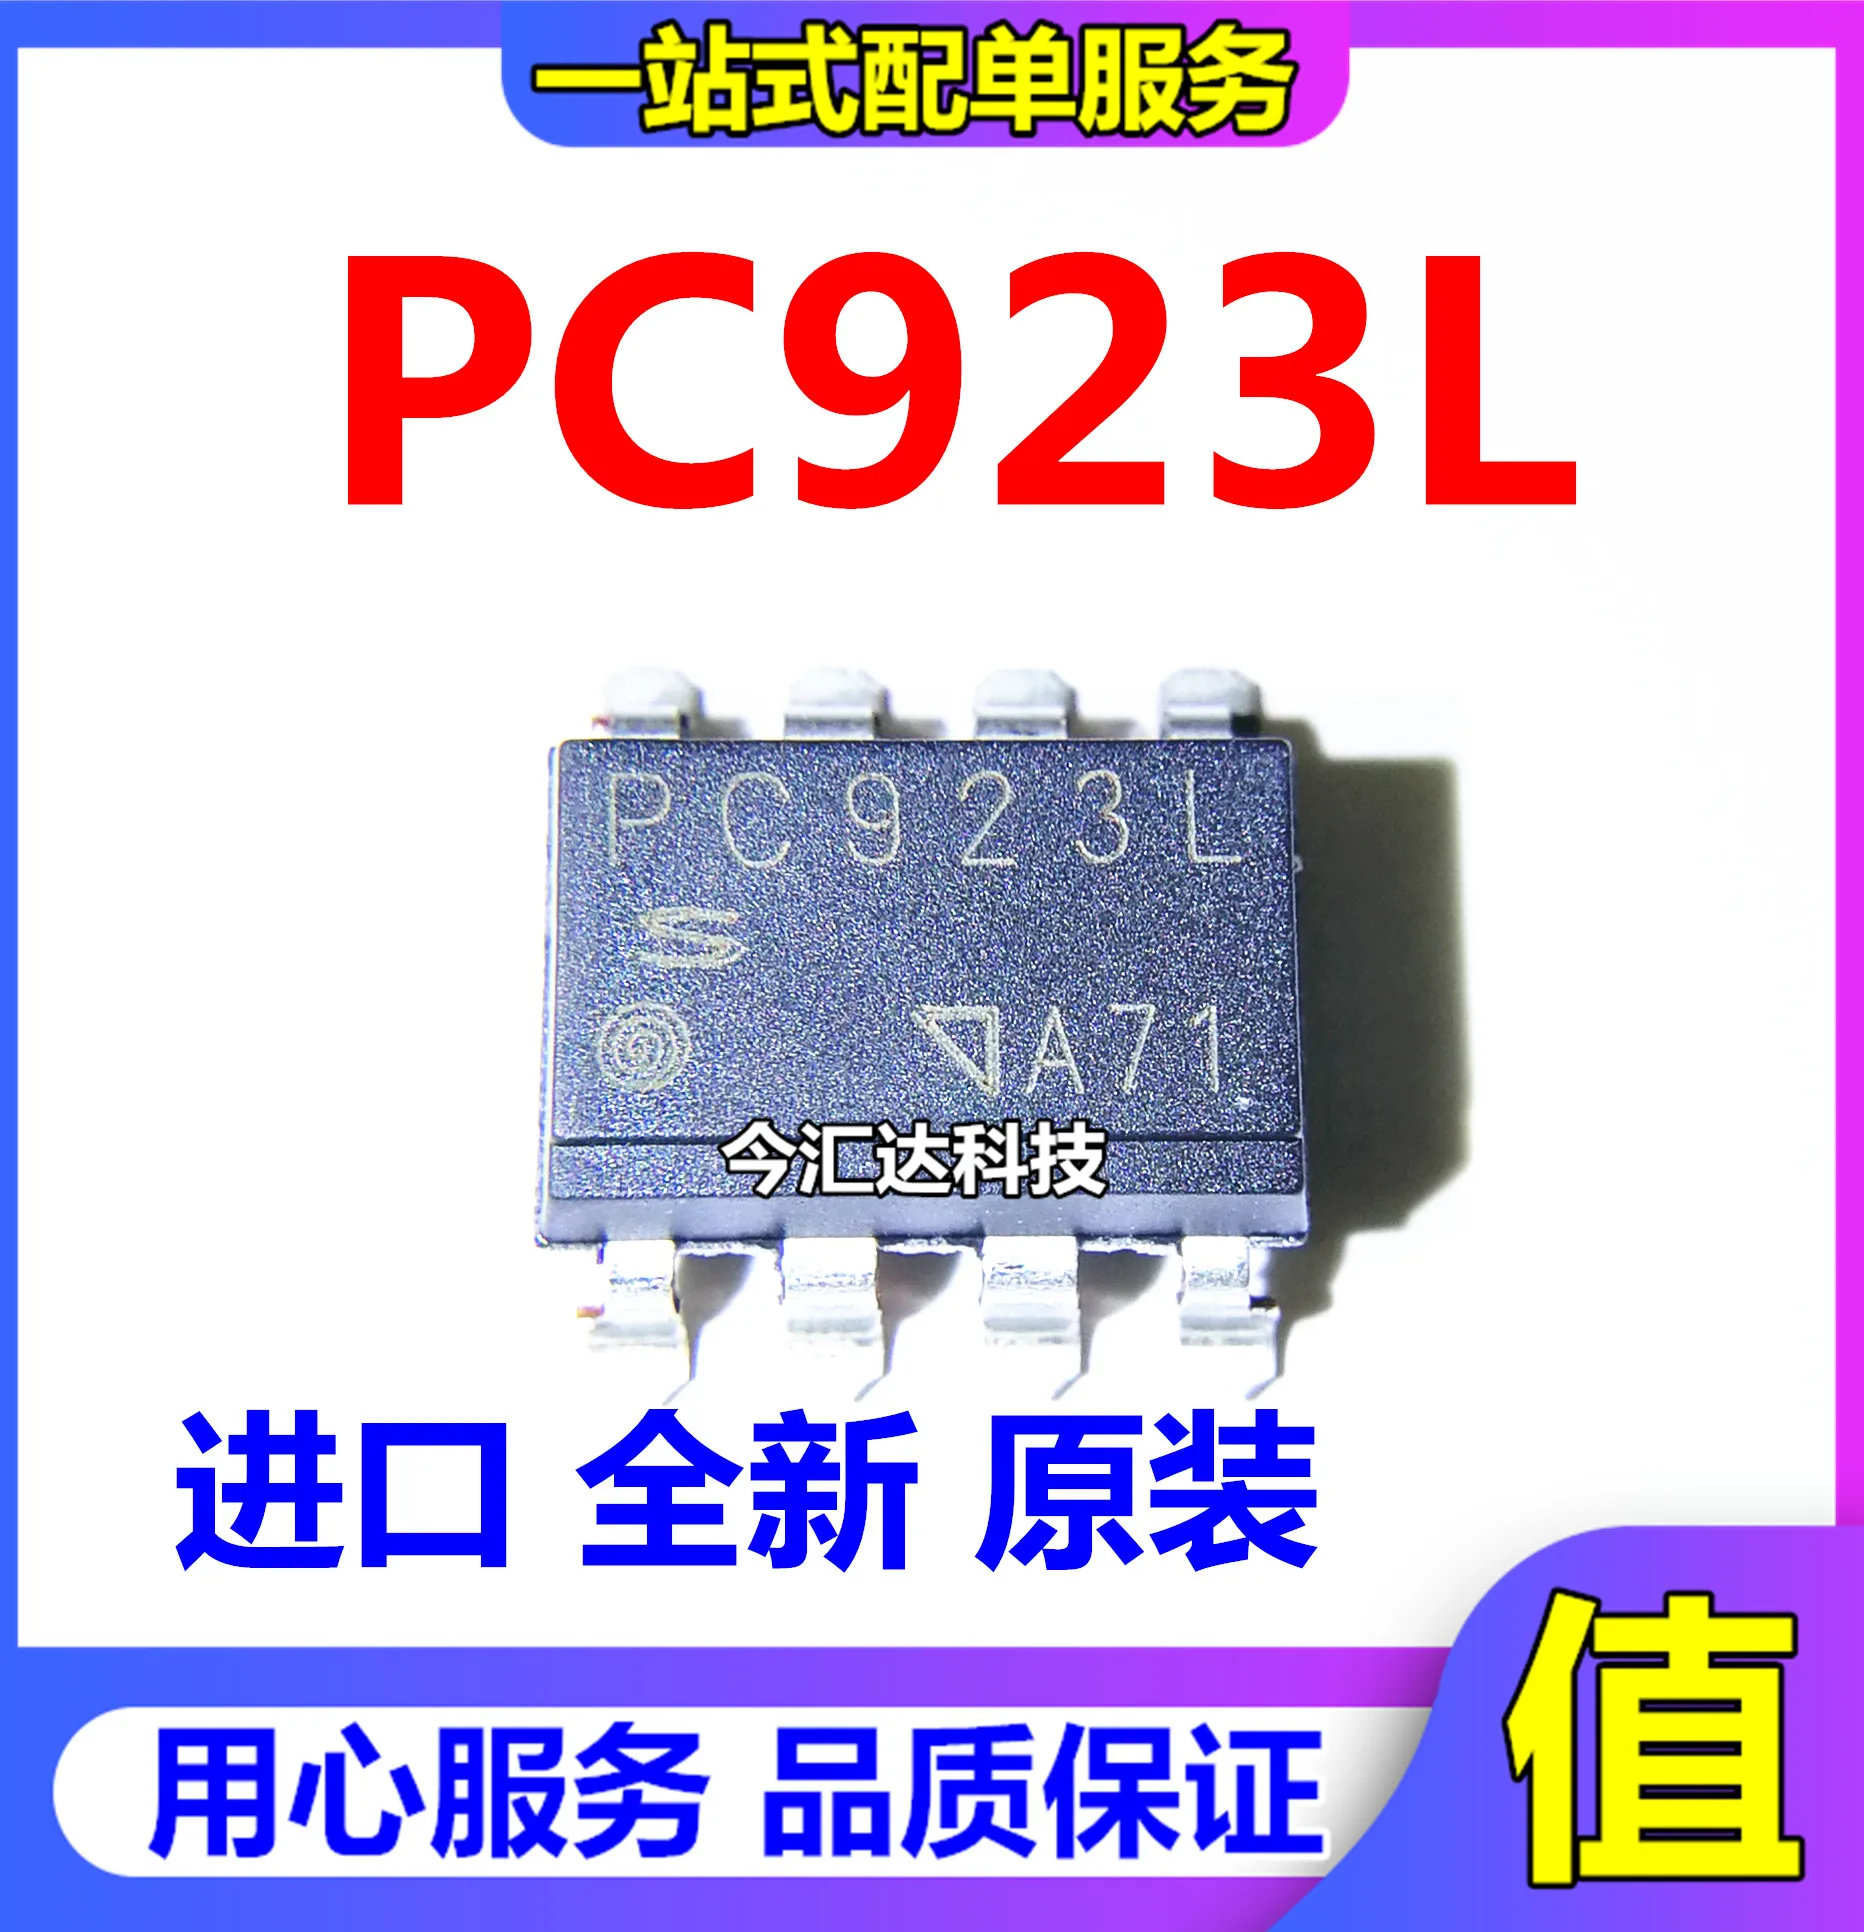 

30pcs original new 30pcs original new PC923L PC923 SOP8 optocoupler isolator